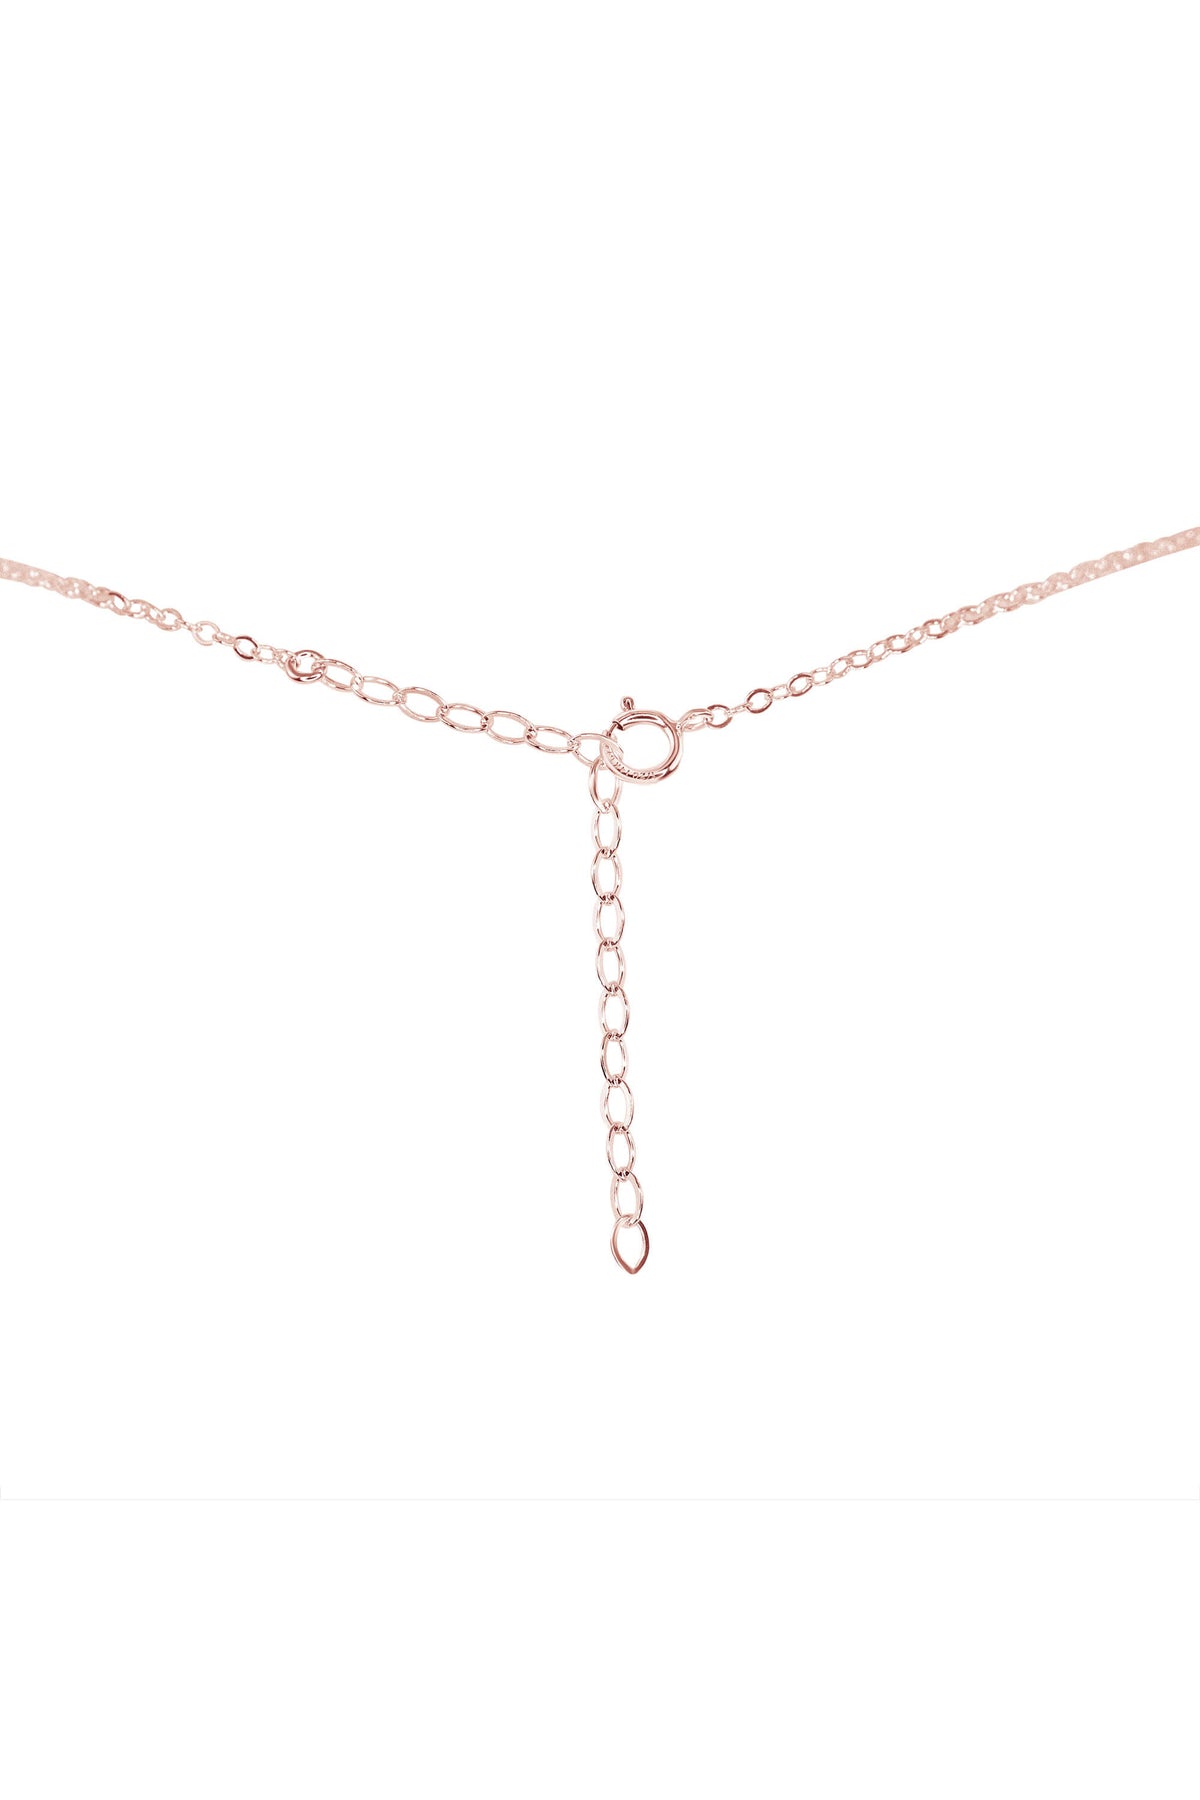 Raw Crystal Pendant Choker - Citrine - 14K Rose Gold Fill - Luna Tide Handmade Jewellery